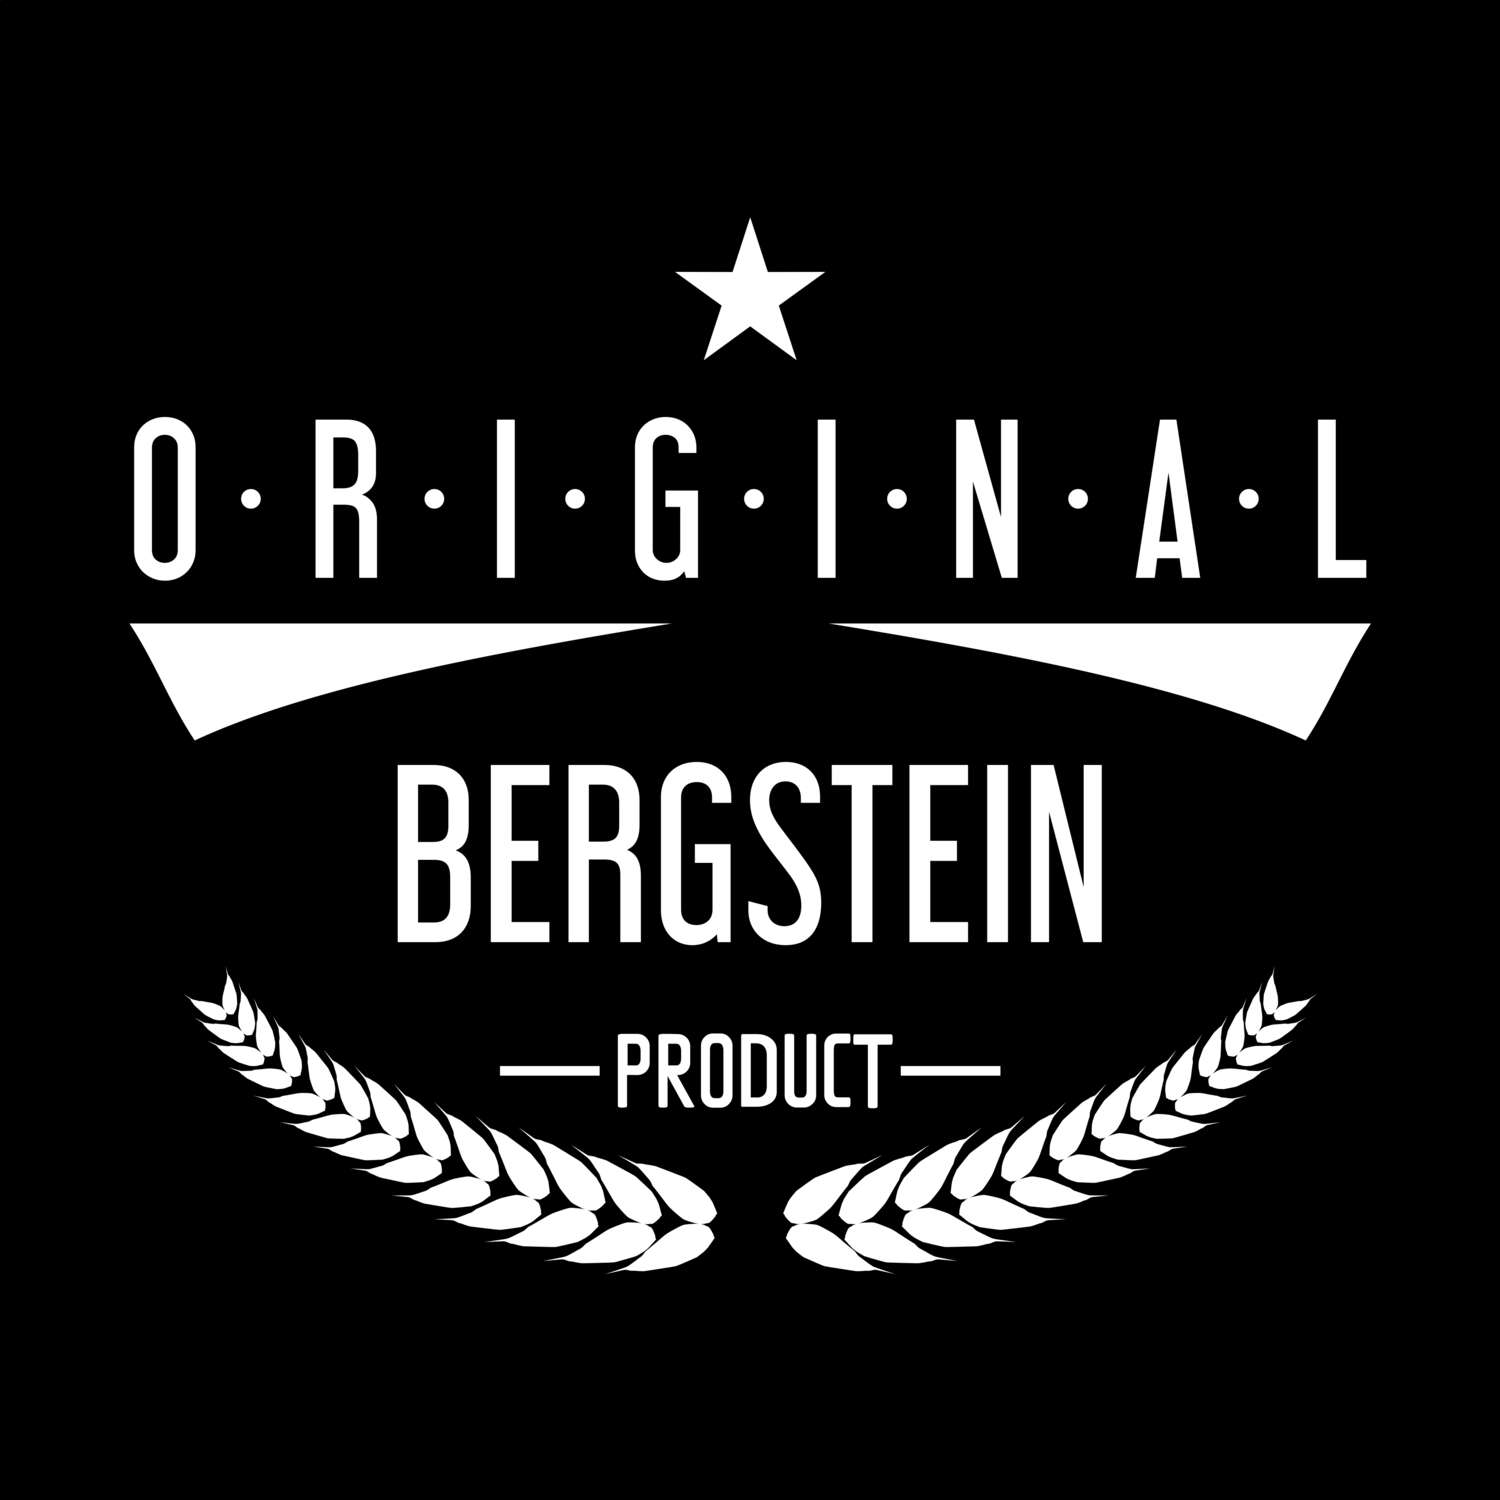 Bergstein T-Shirt »Original Product«